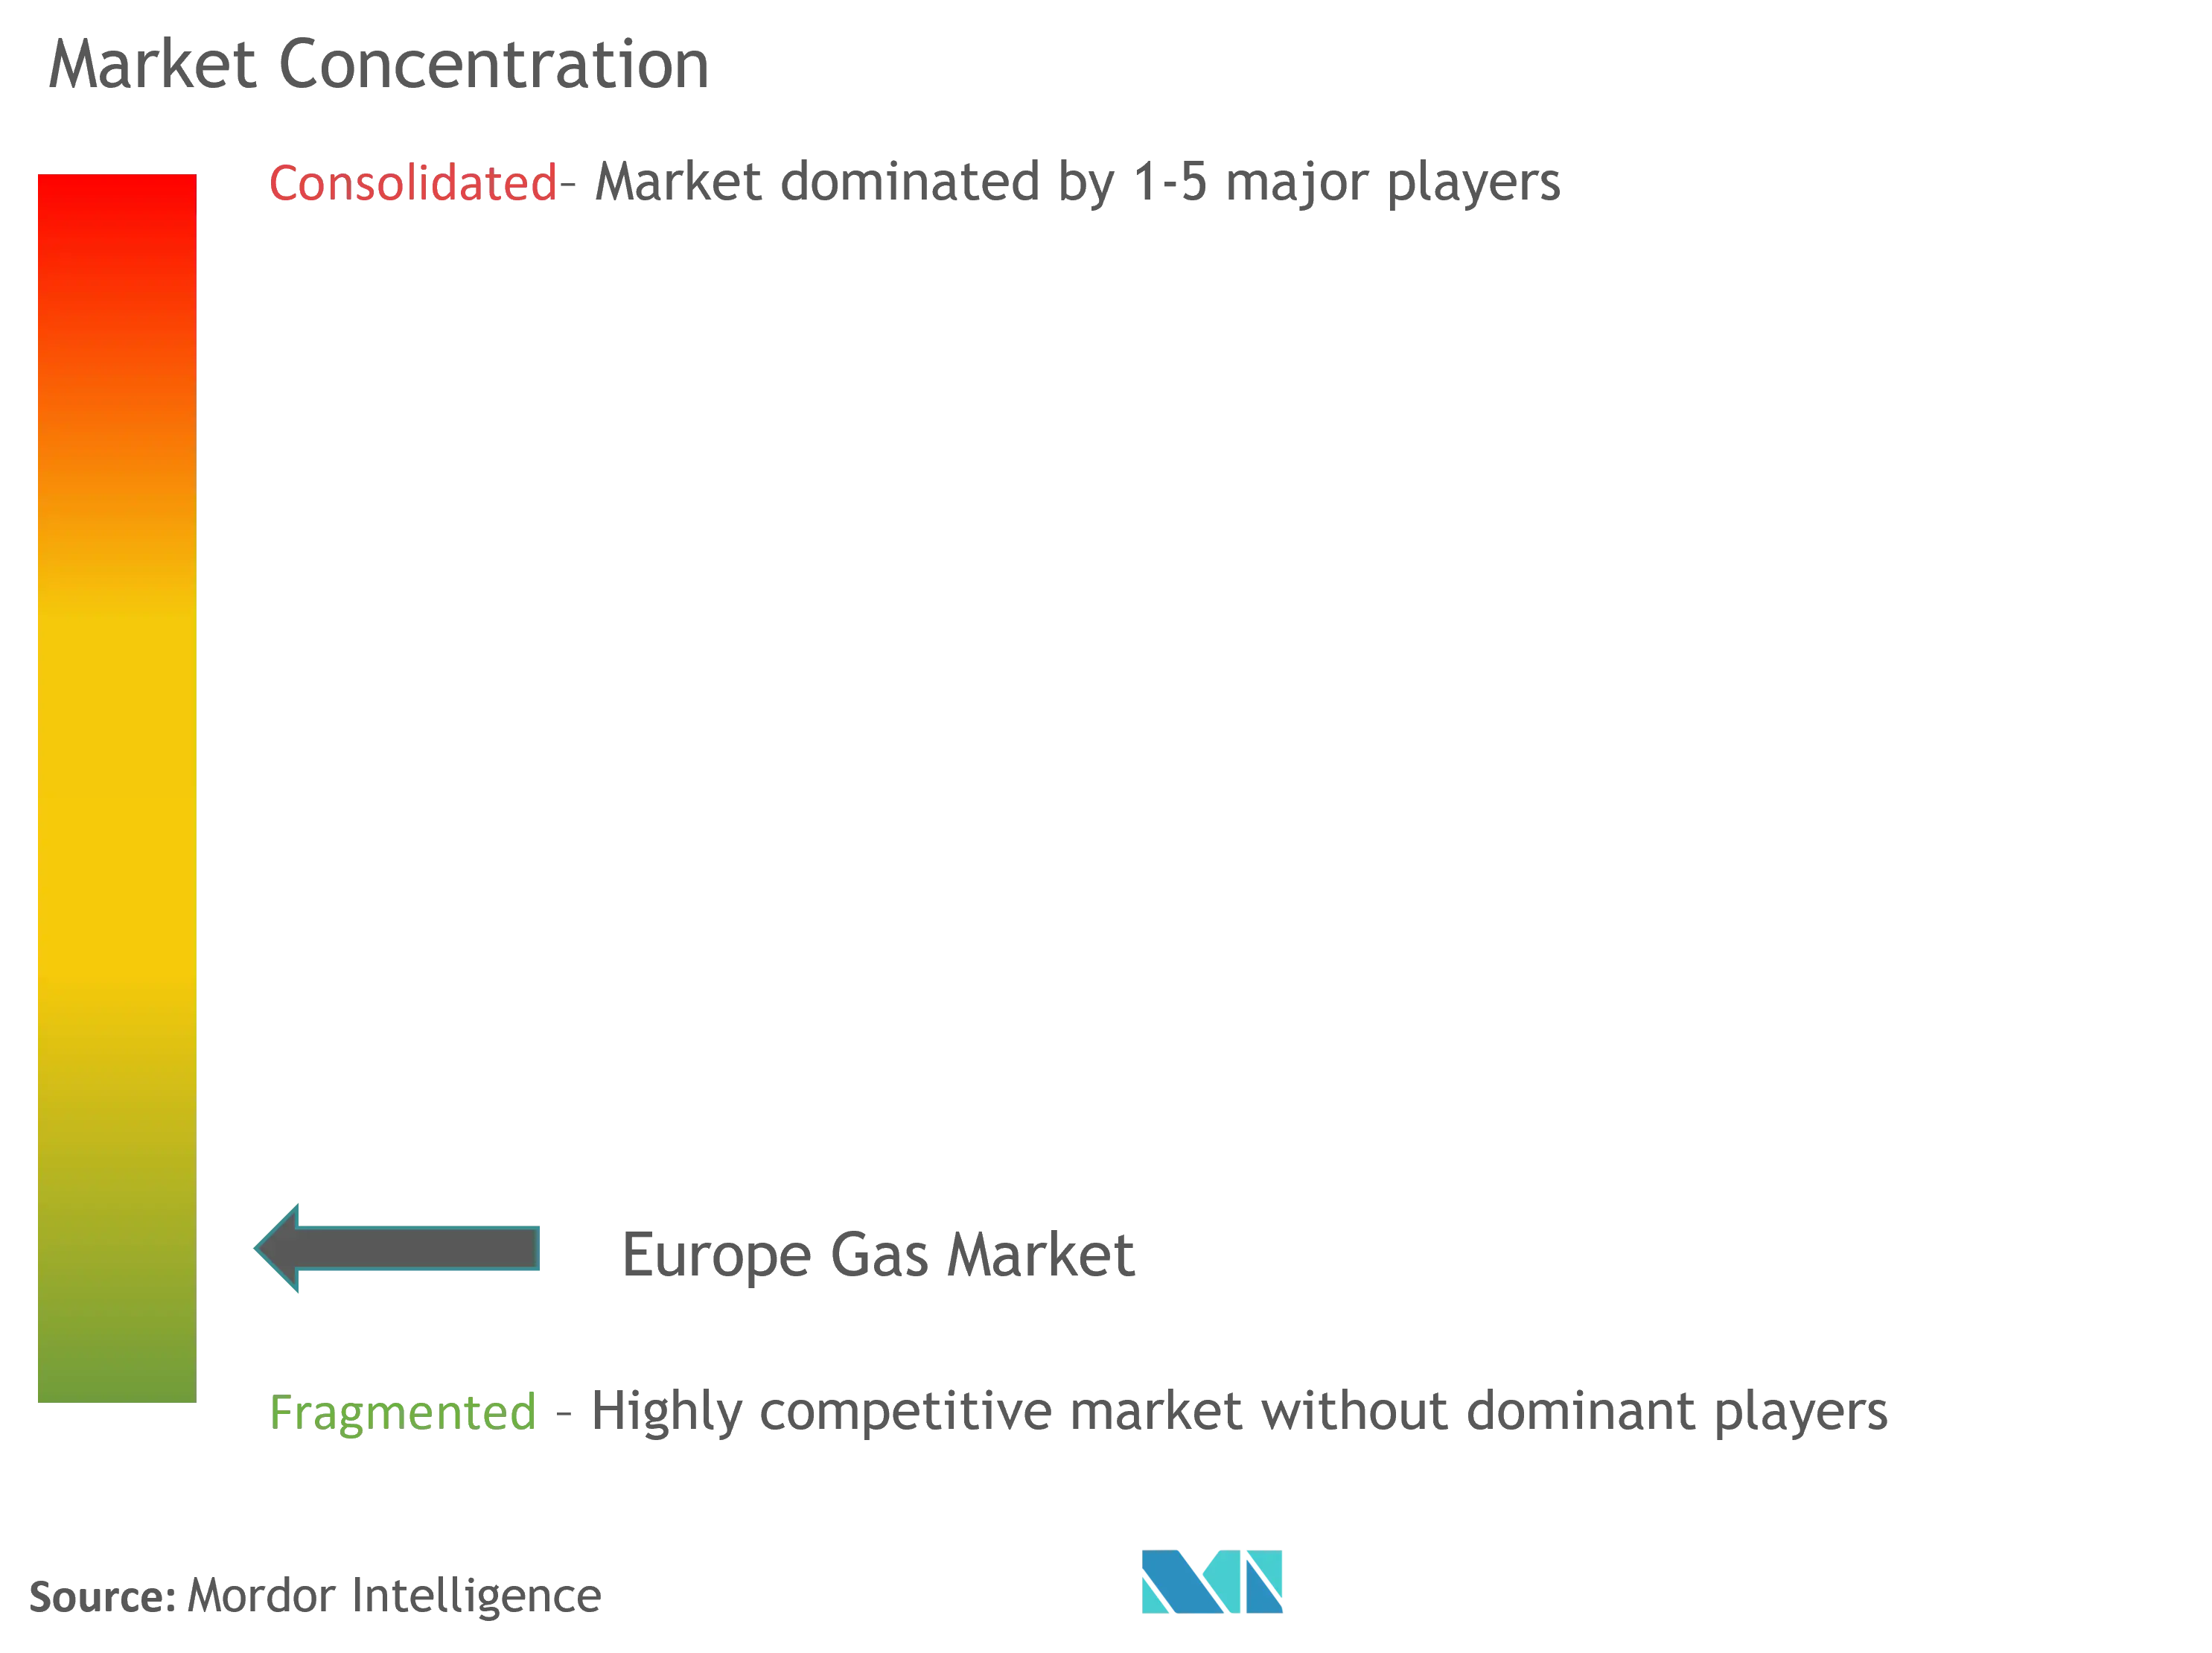 Market Concentration - Europe Gas Market.png